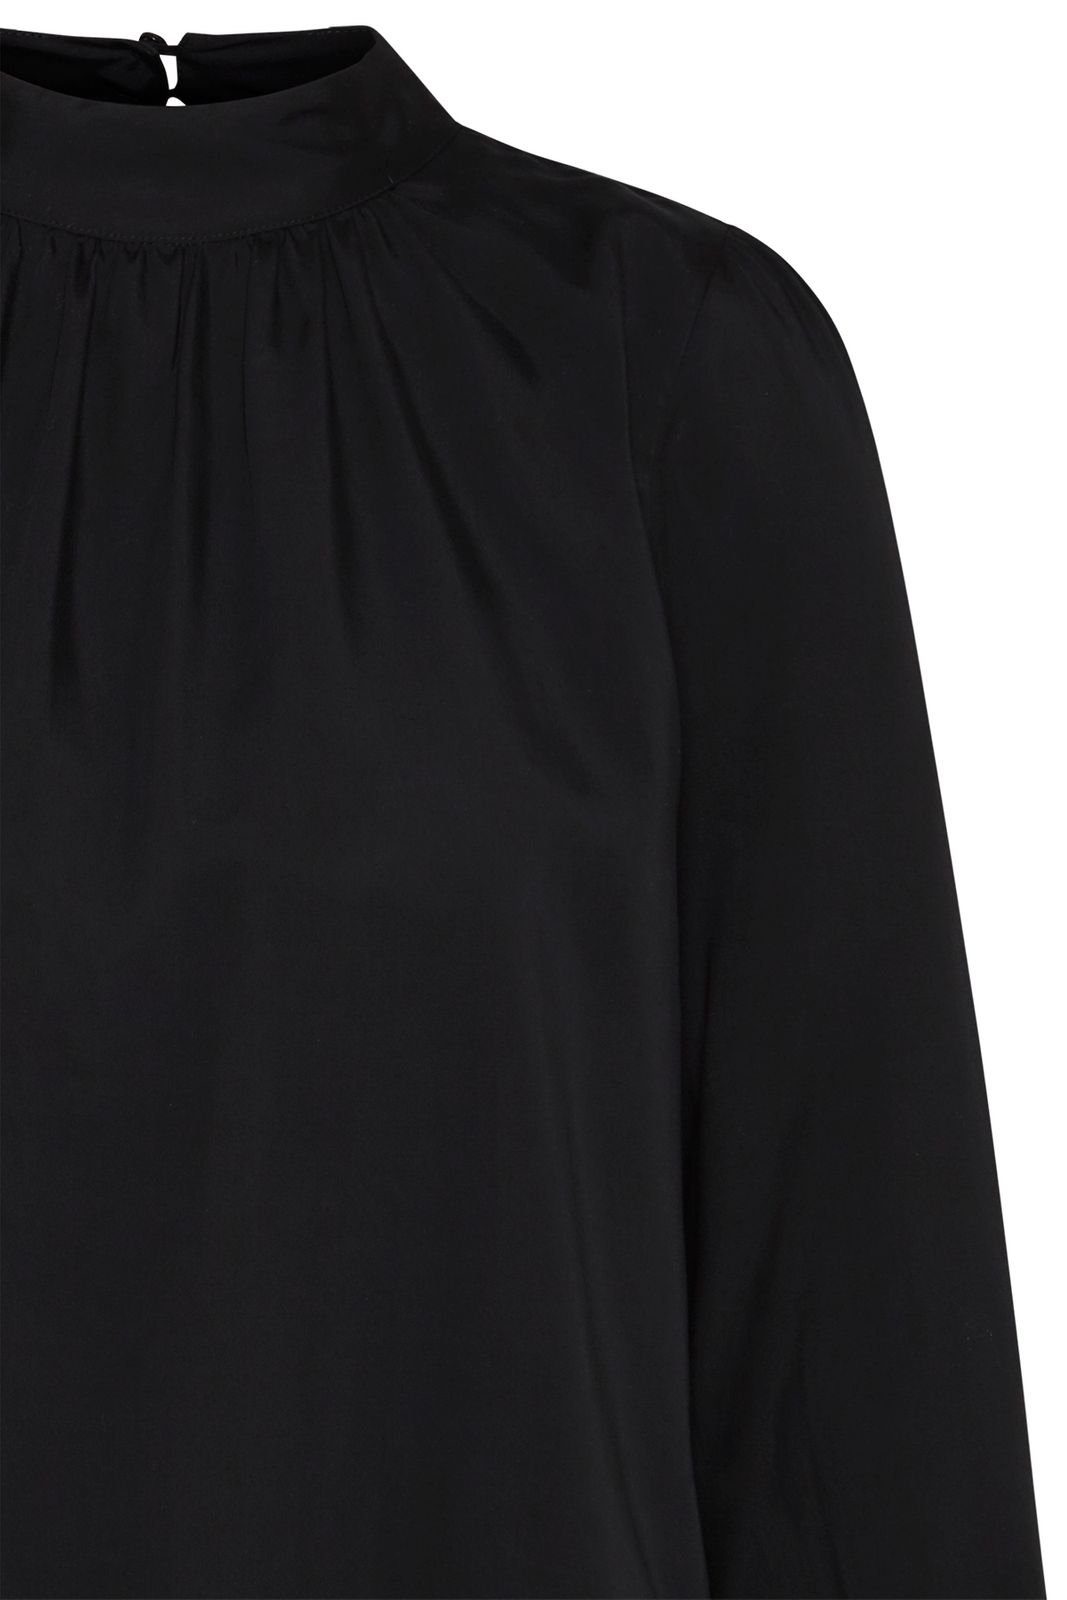 blouse turtleneck black 900 Bluse - Klassische wunderwerk TENCEL